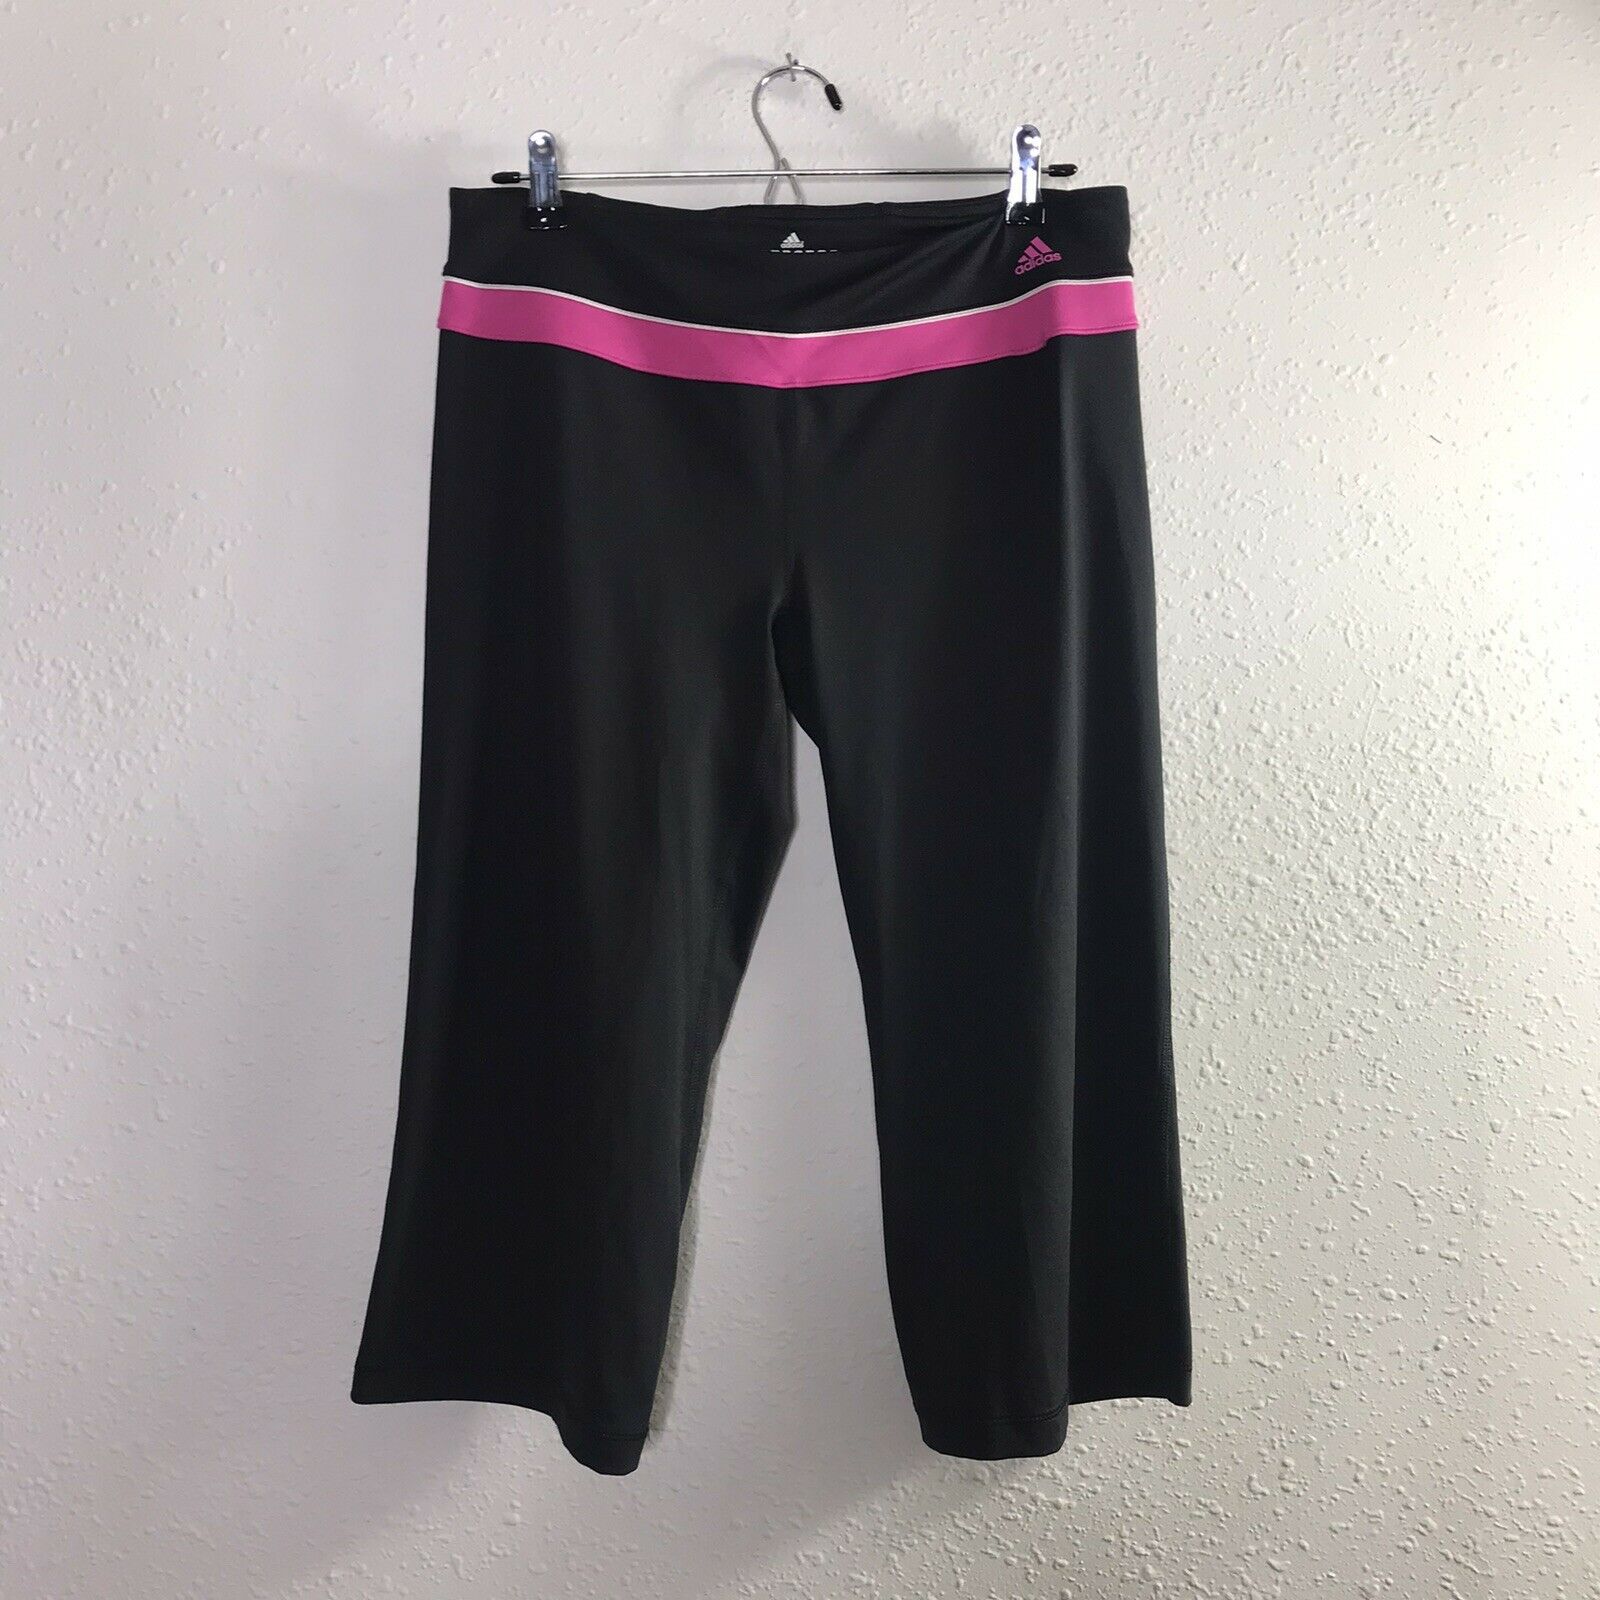 Adidas Climalite Women’s Capri Cropped Athletic Pants Size Medium Pink Black